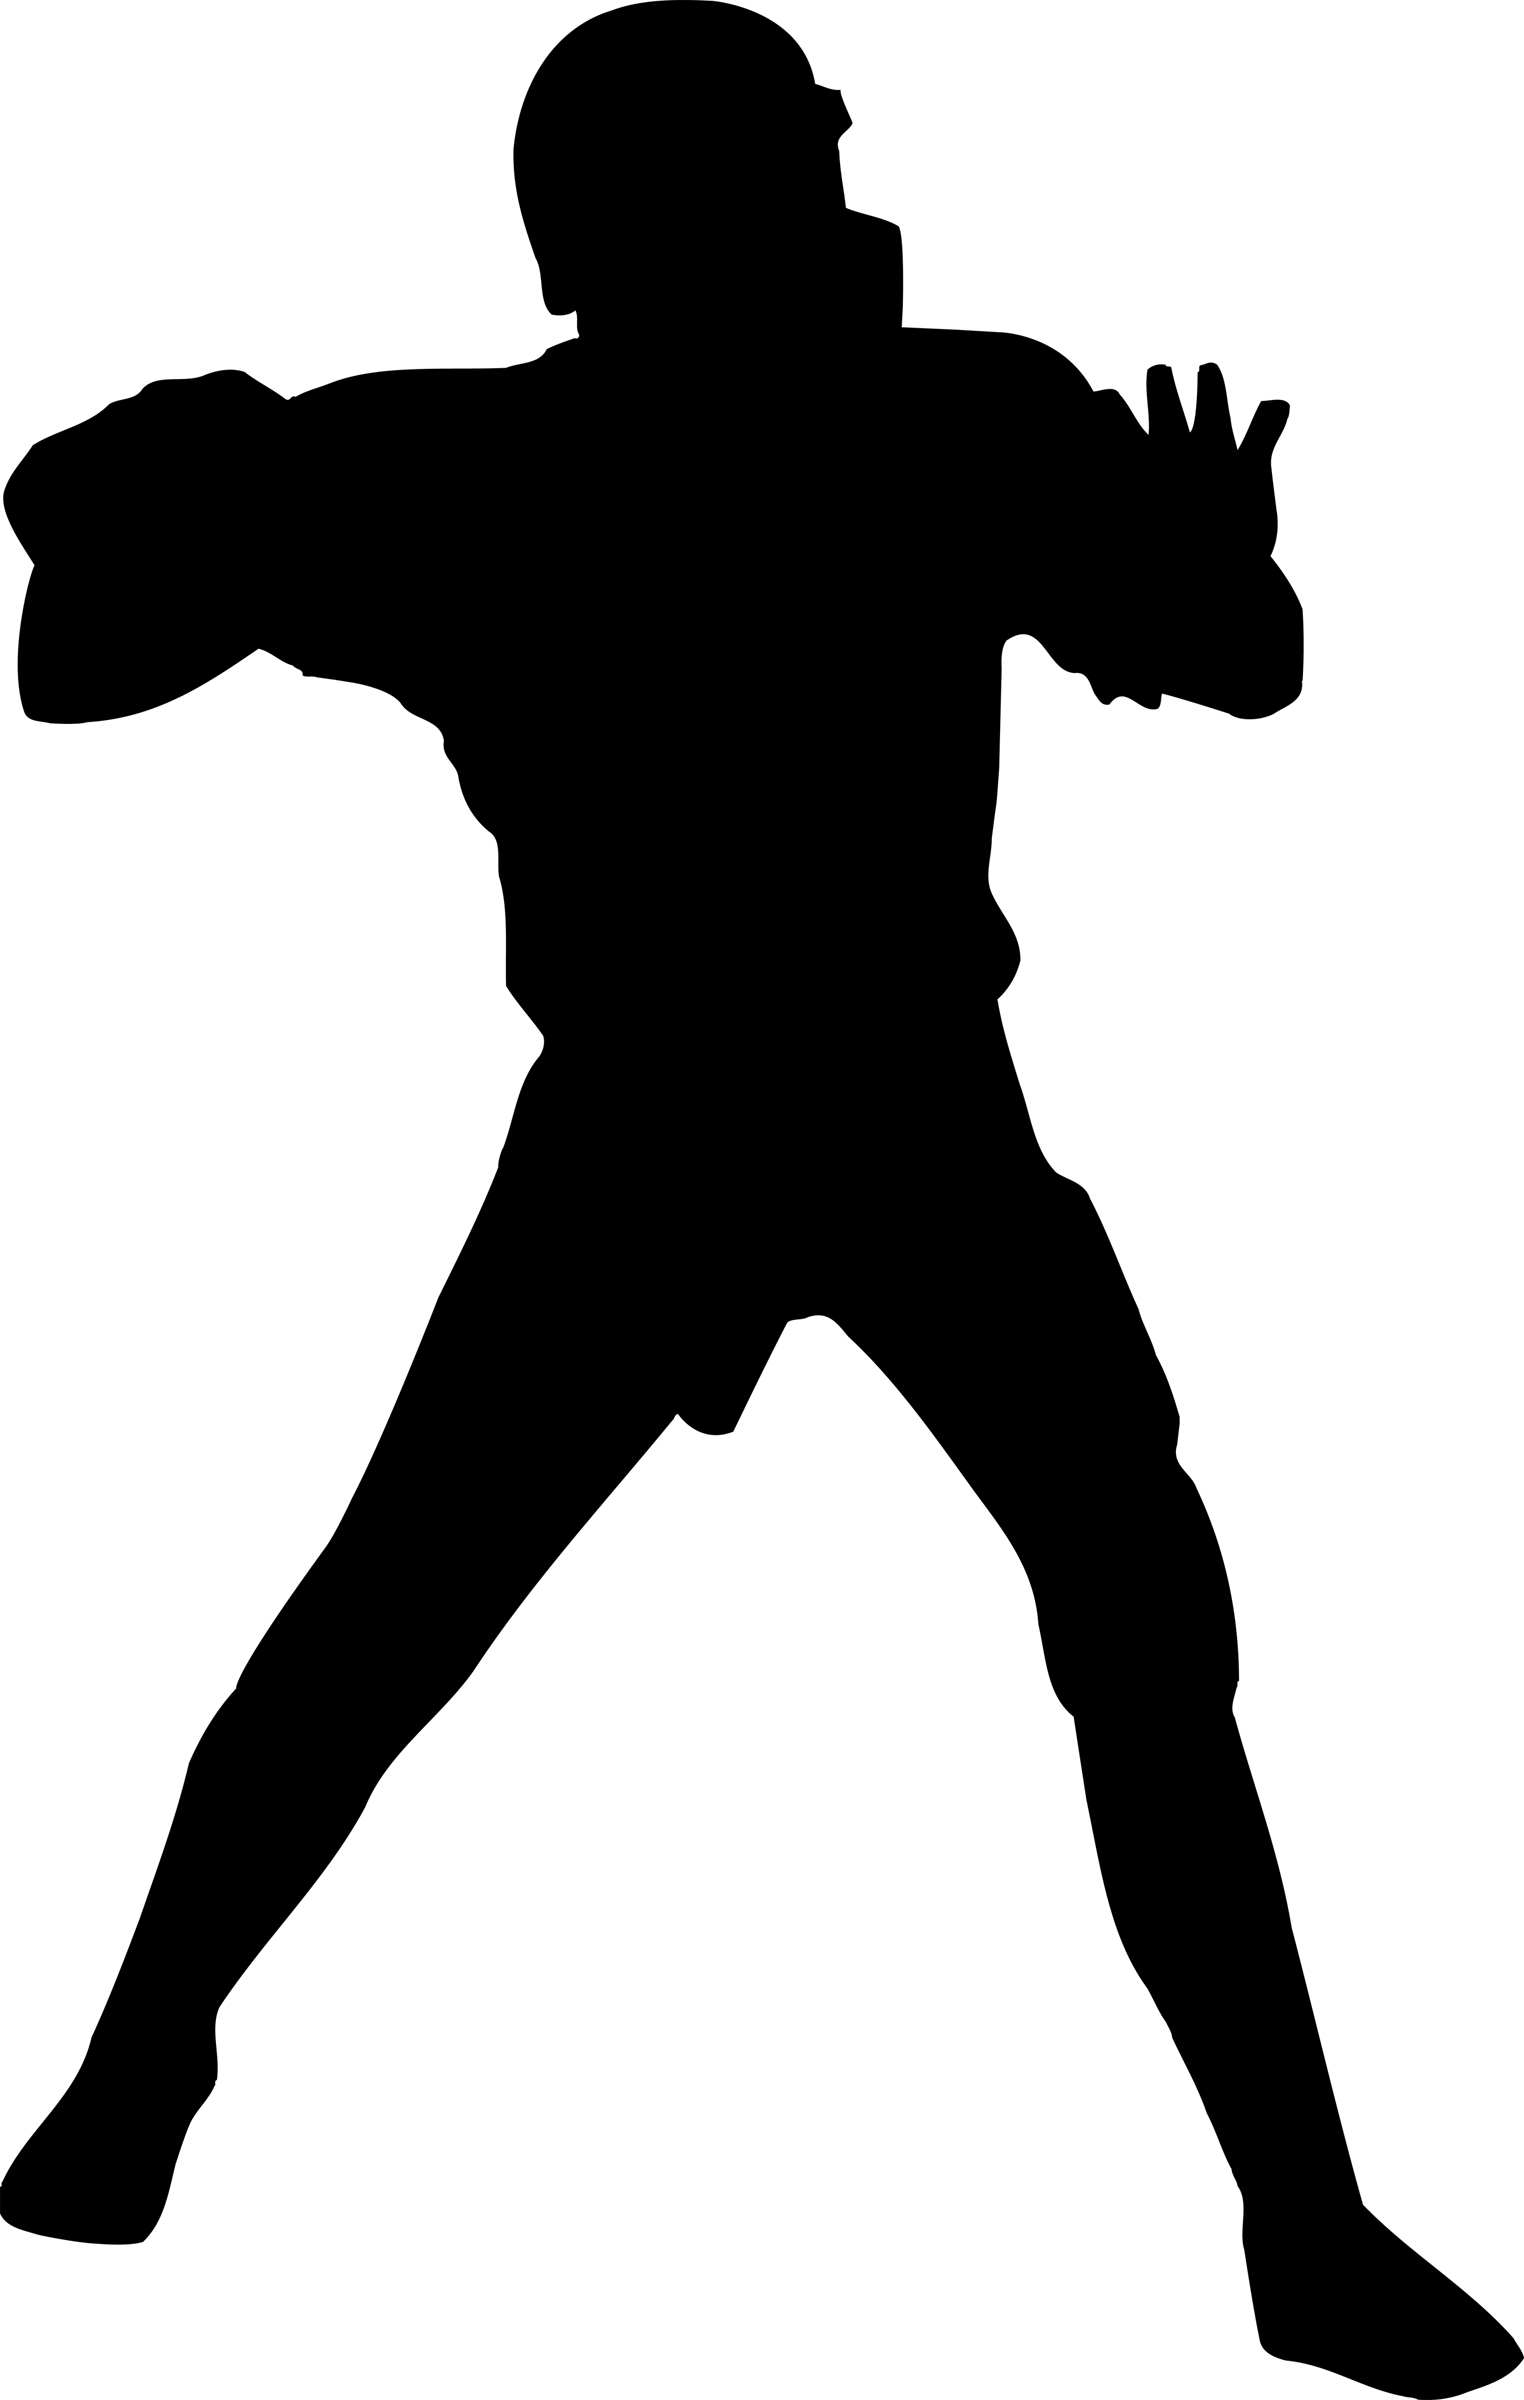 Football quarterback silhouette clipart